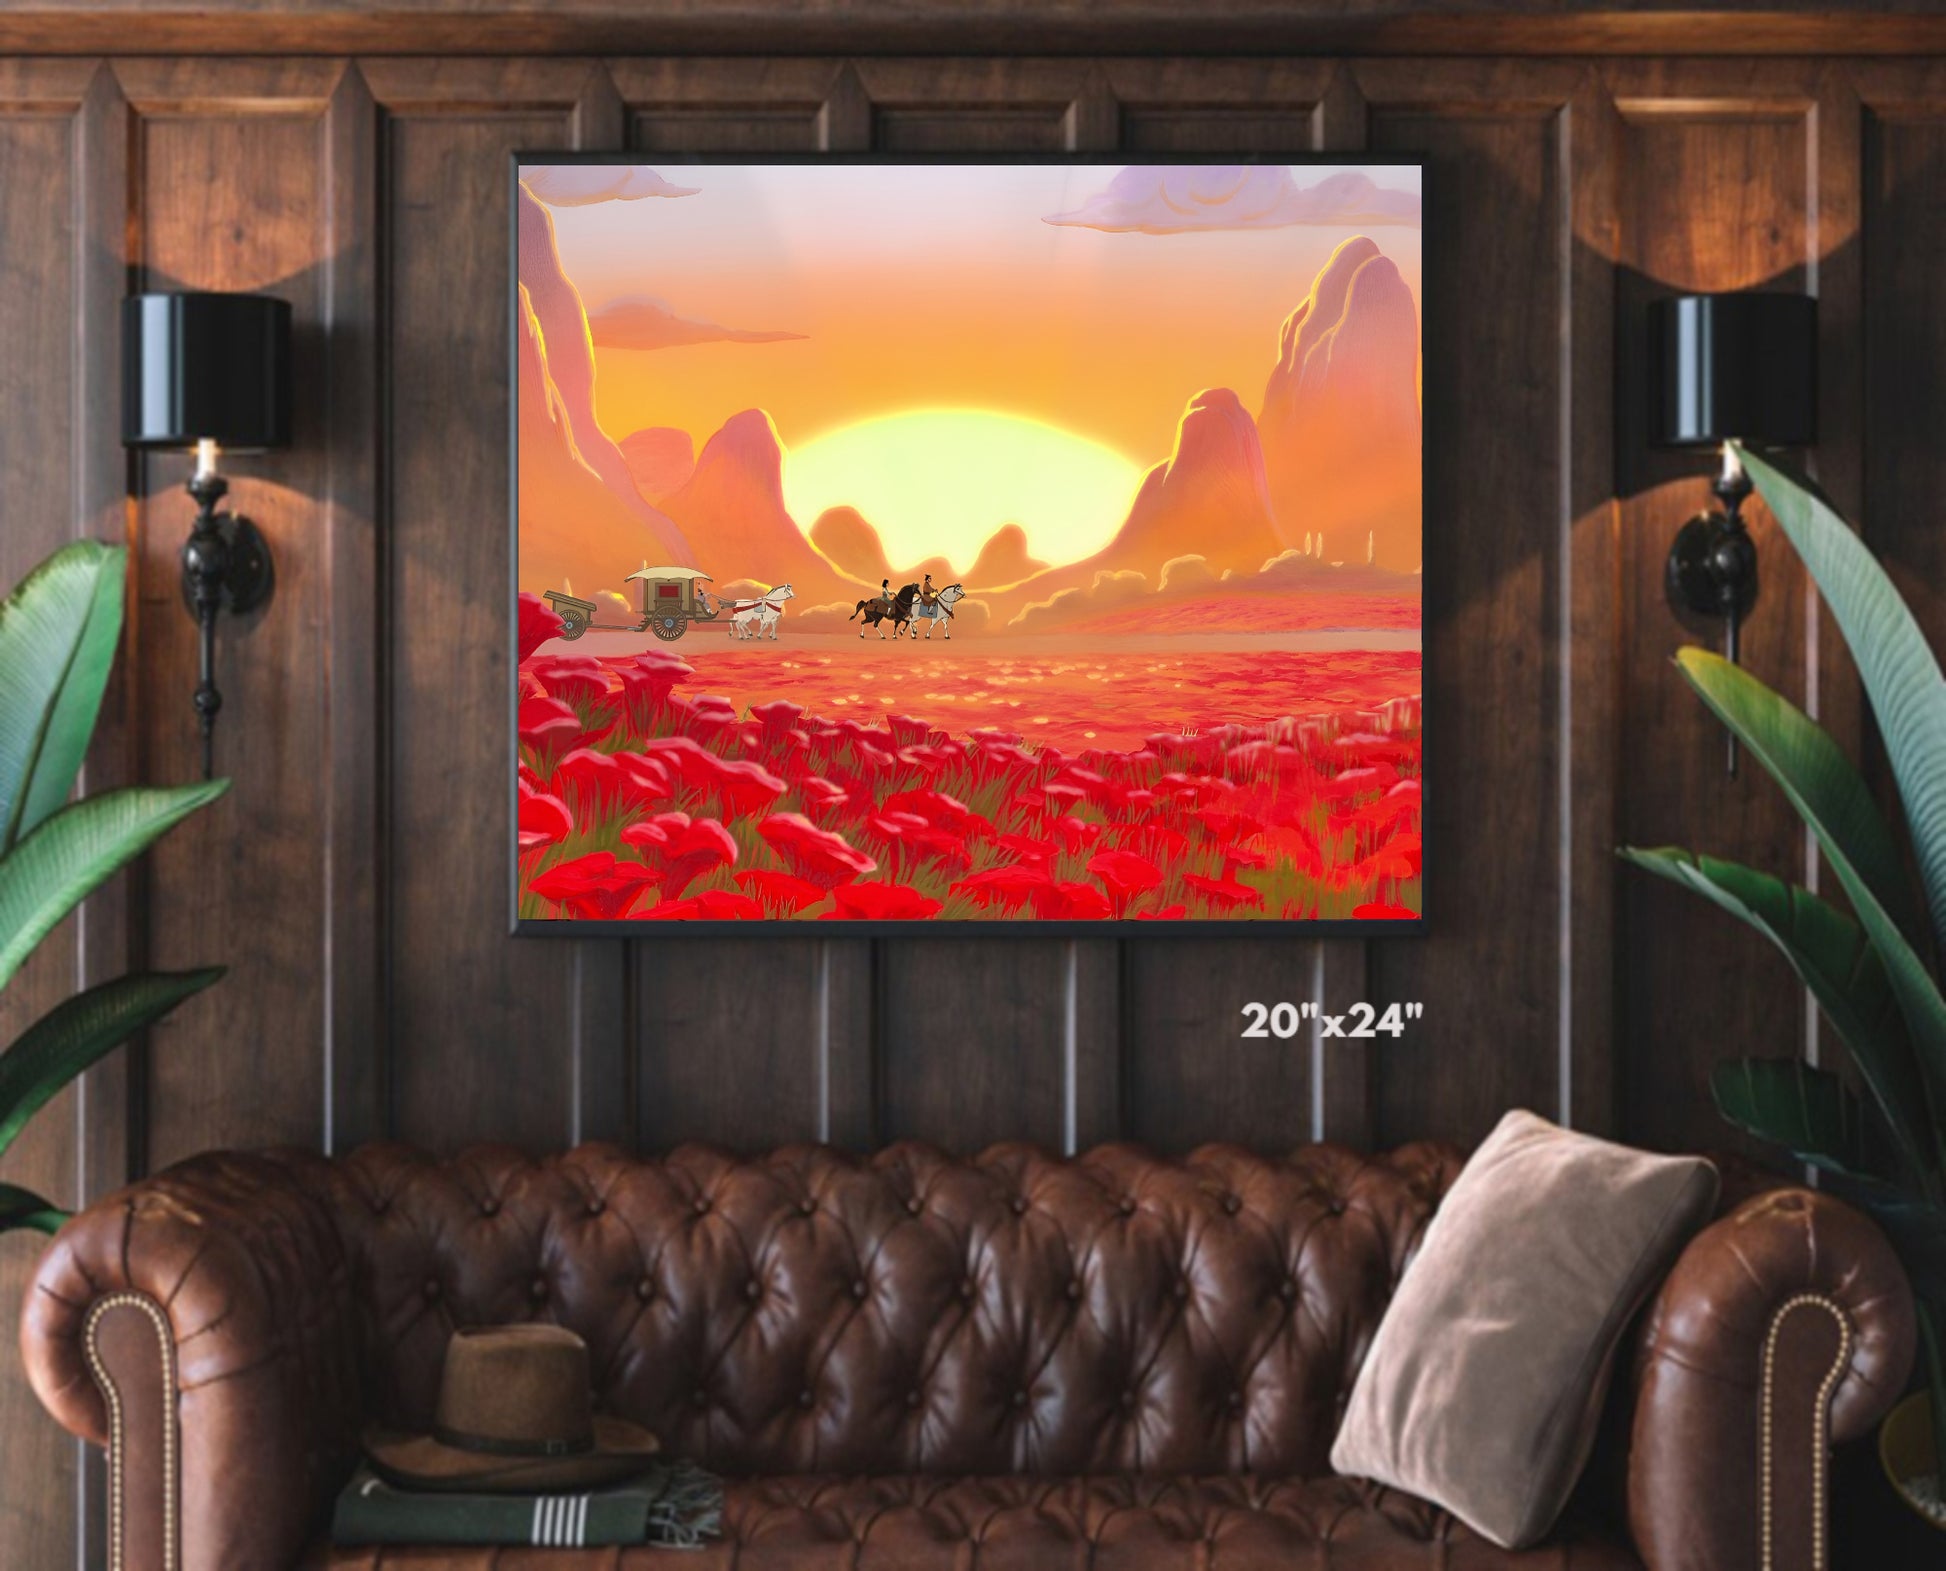 Mulan red poppies artwork canvas